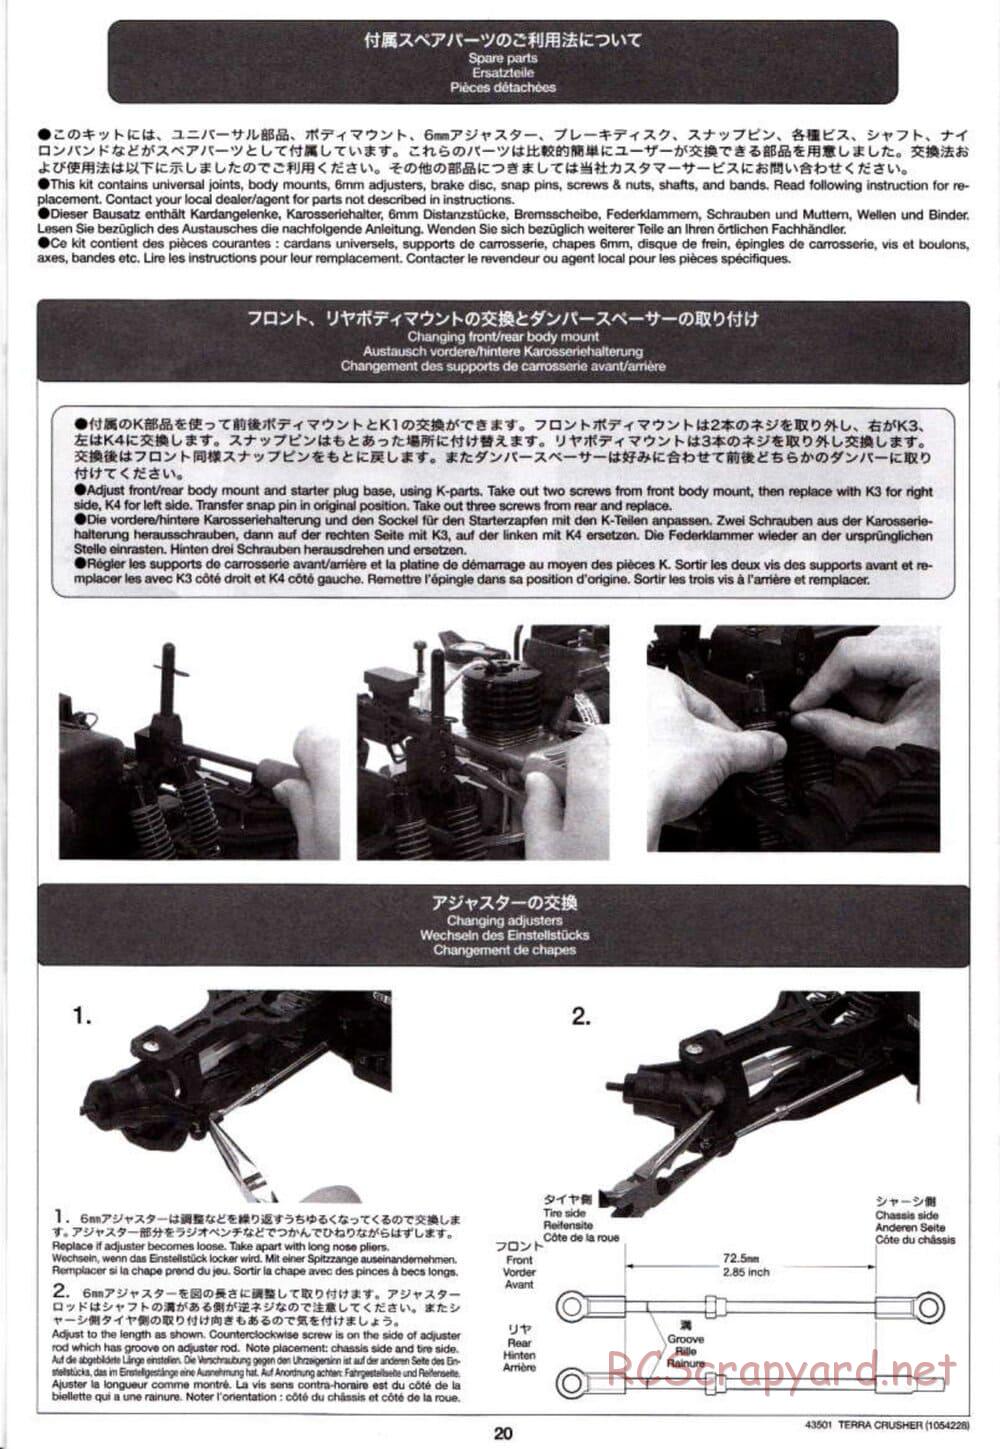 Tamiya - Terra Crusher - TGM-02 Chassis - Manual - Page 20